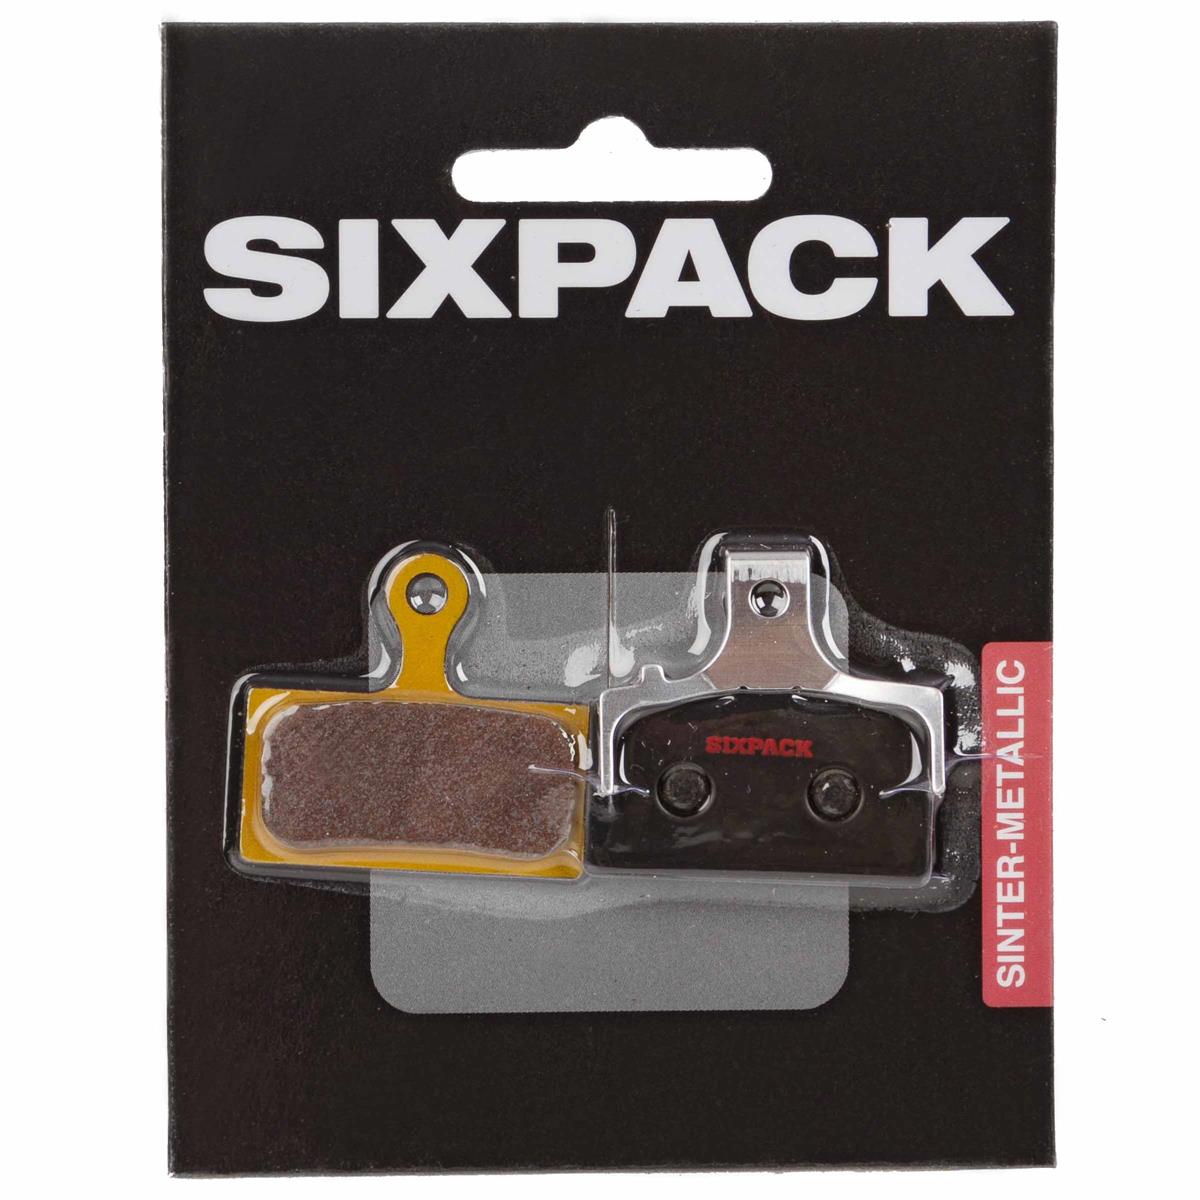 Sixpack MTB Disc Brake Pad Shimano XTR/XT/SLX Sinter, for Shimano XTR/XT/SLX (IcetechR compatible)